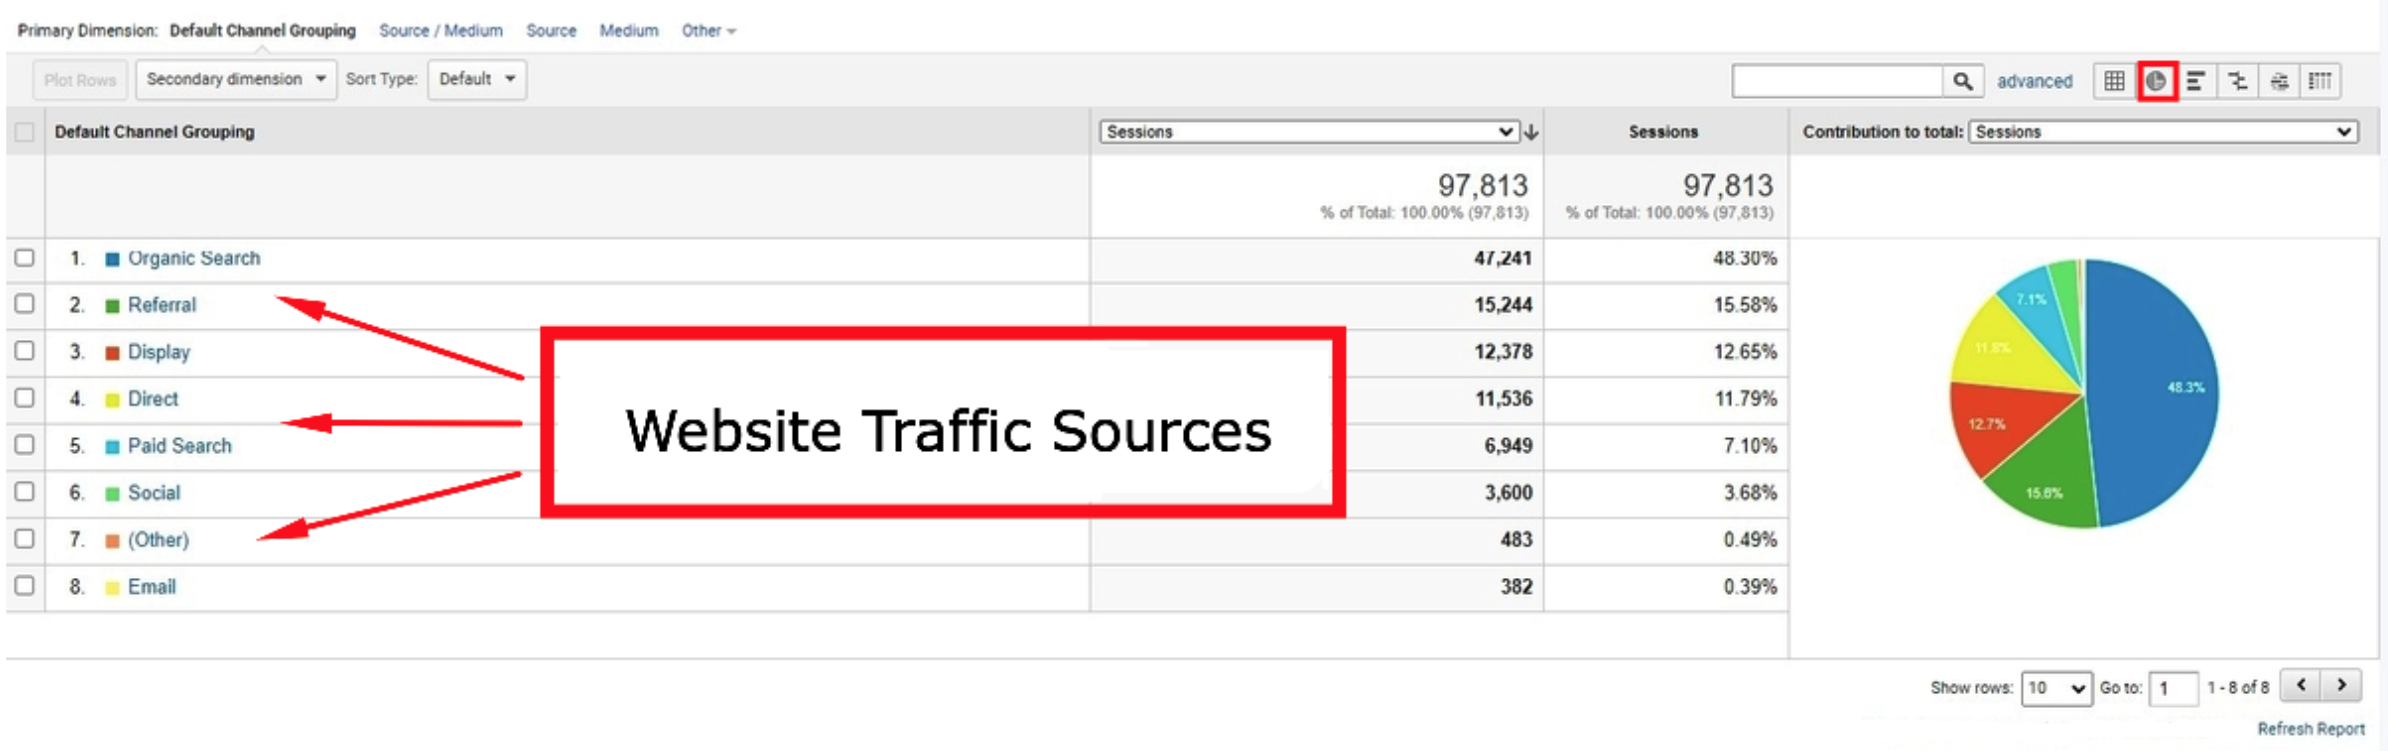 website traffic sources | Google | Agency Vista 